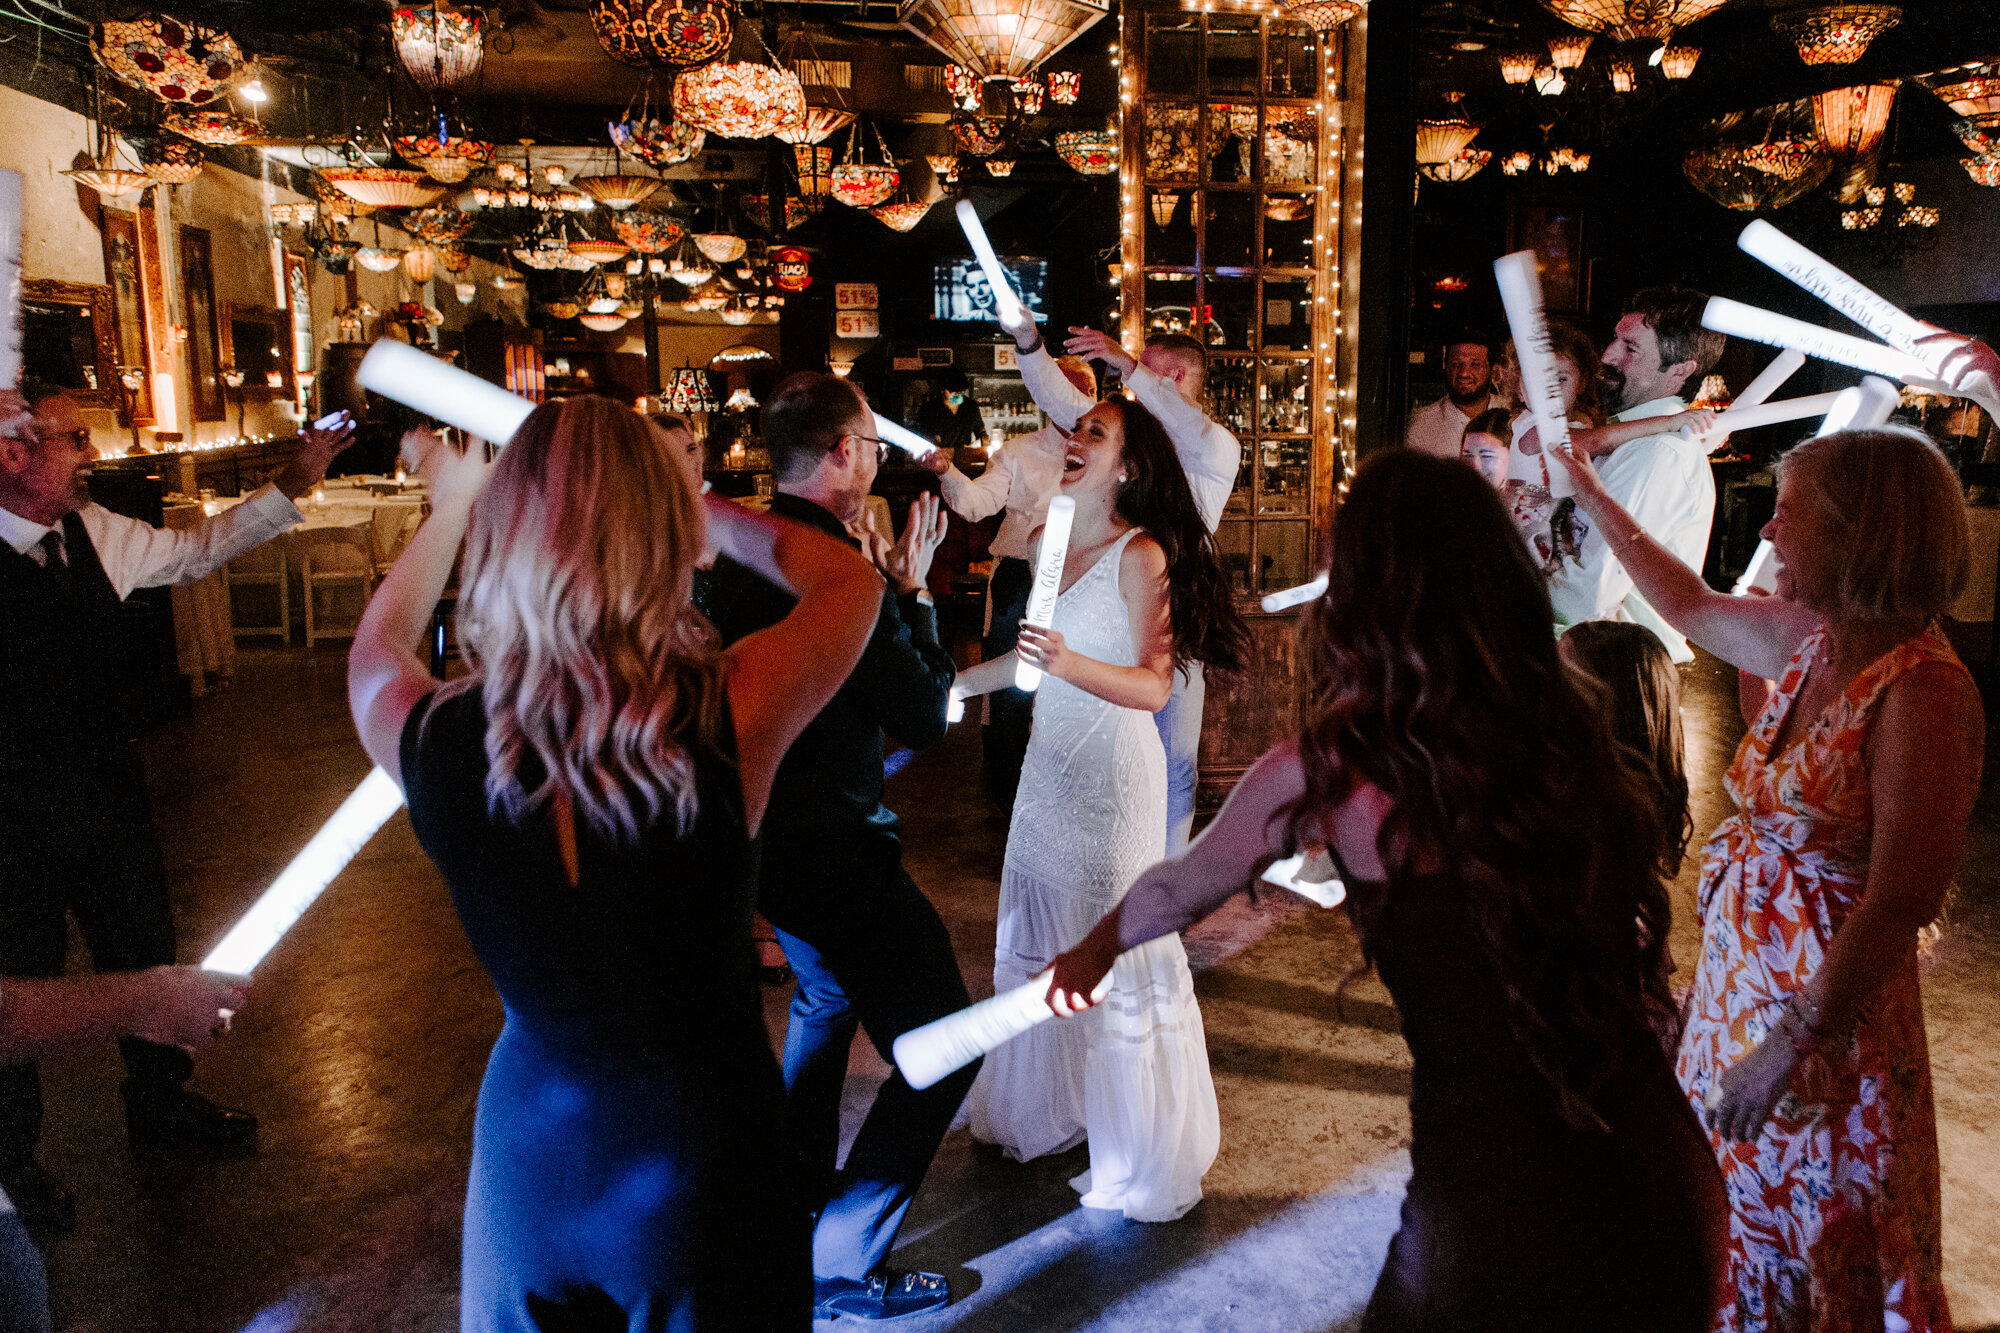 Party dancing with glow sticks. Glamorous Wedding Reception at Nouveau Antique Art Venue